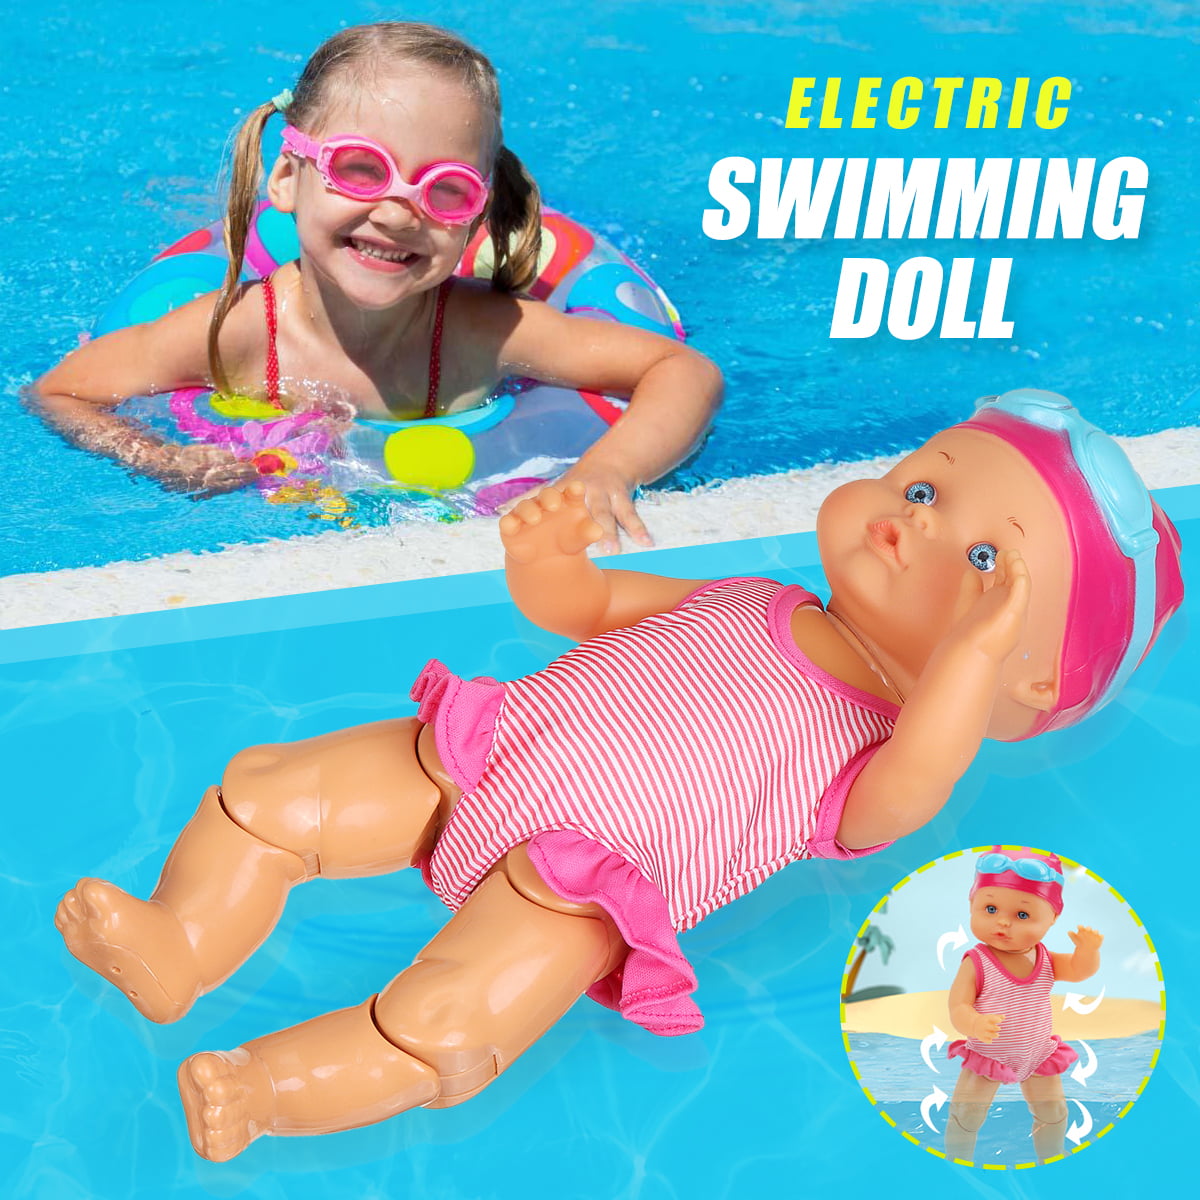 swimming doll